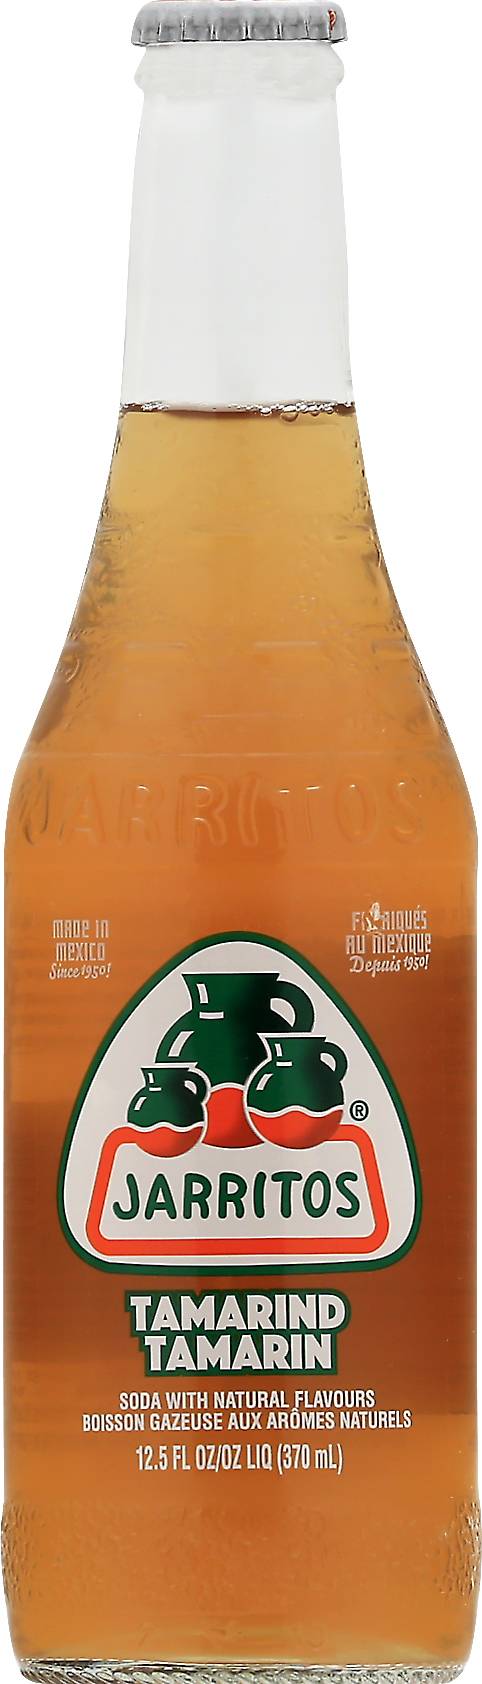 Jarritos Tamarind Soda (12.5 fl oz)